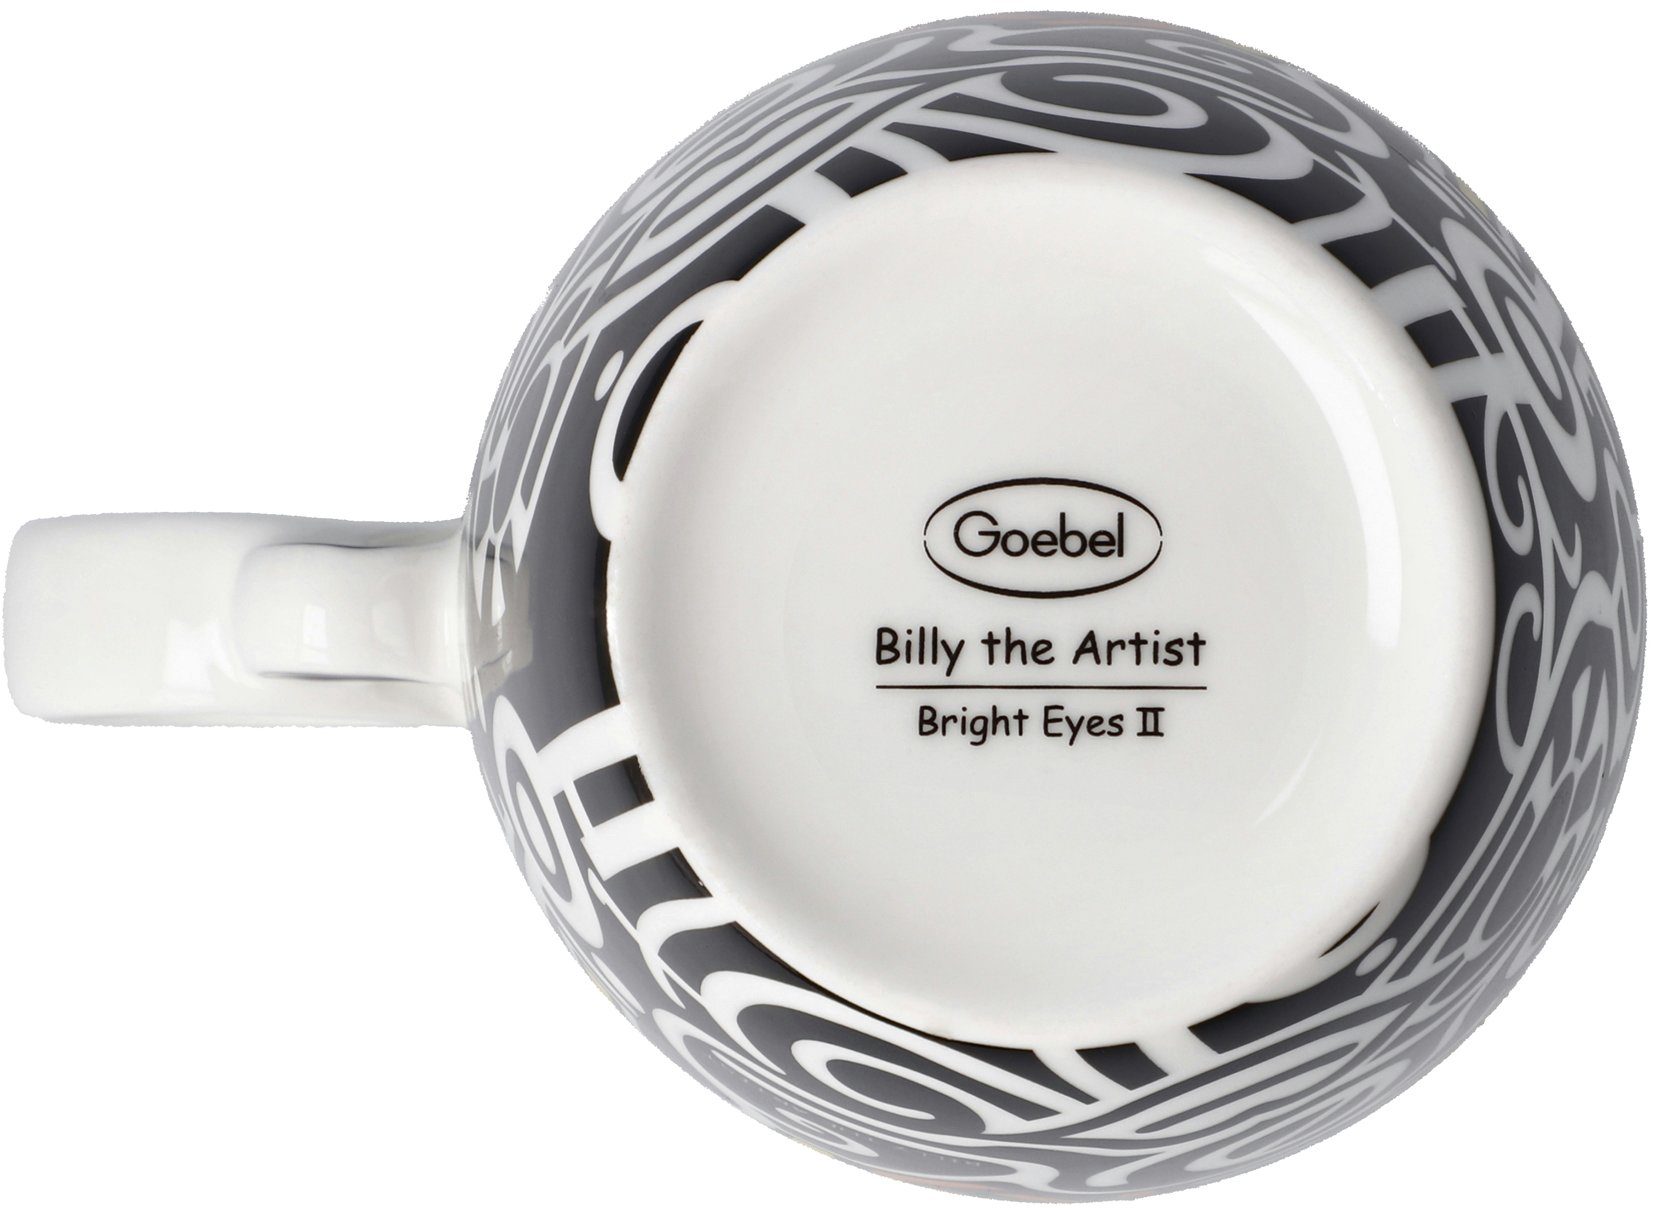 Art, Artist, Porzellan, Pop Eyes - II The Tasse Künstlertasse, Bright Billy Billy Goebel Artist the